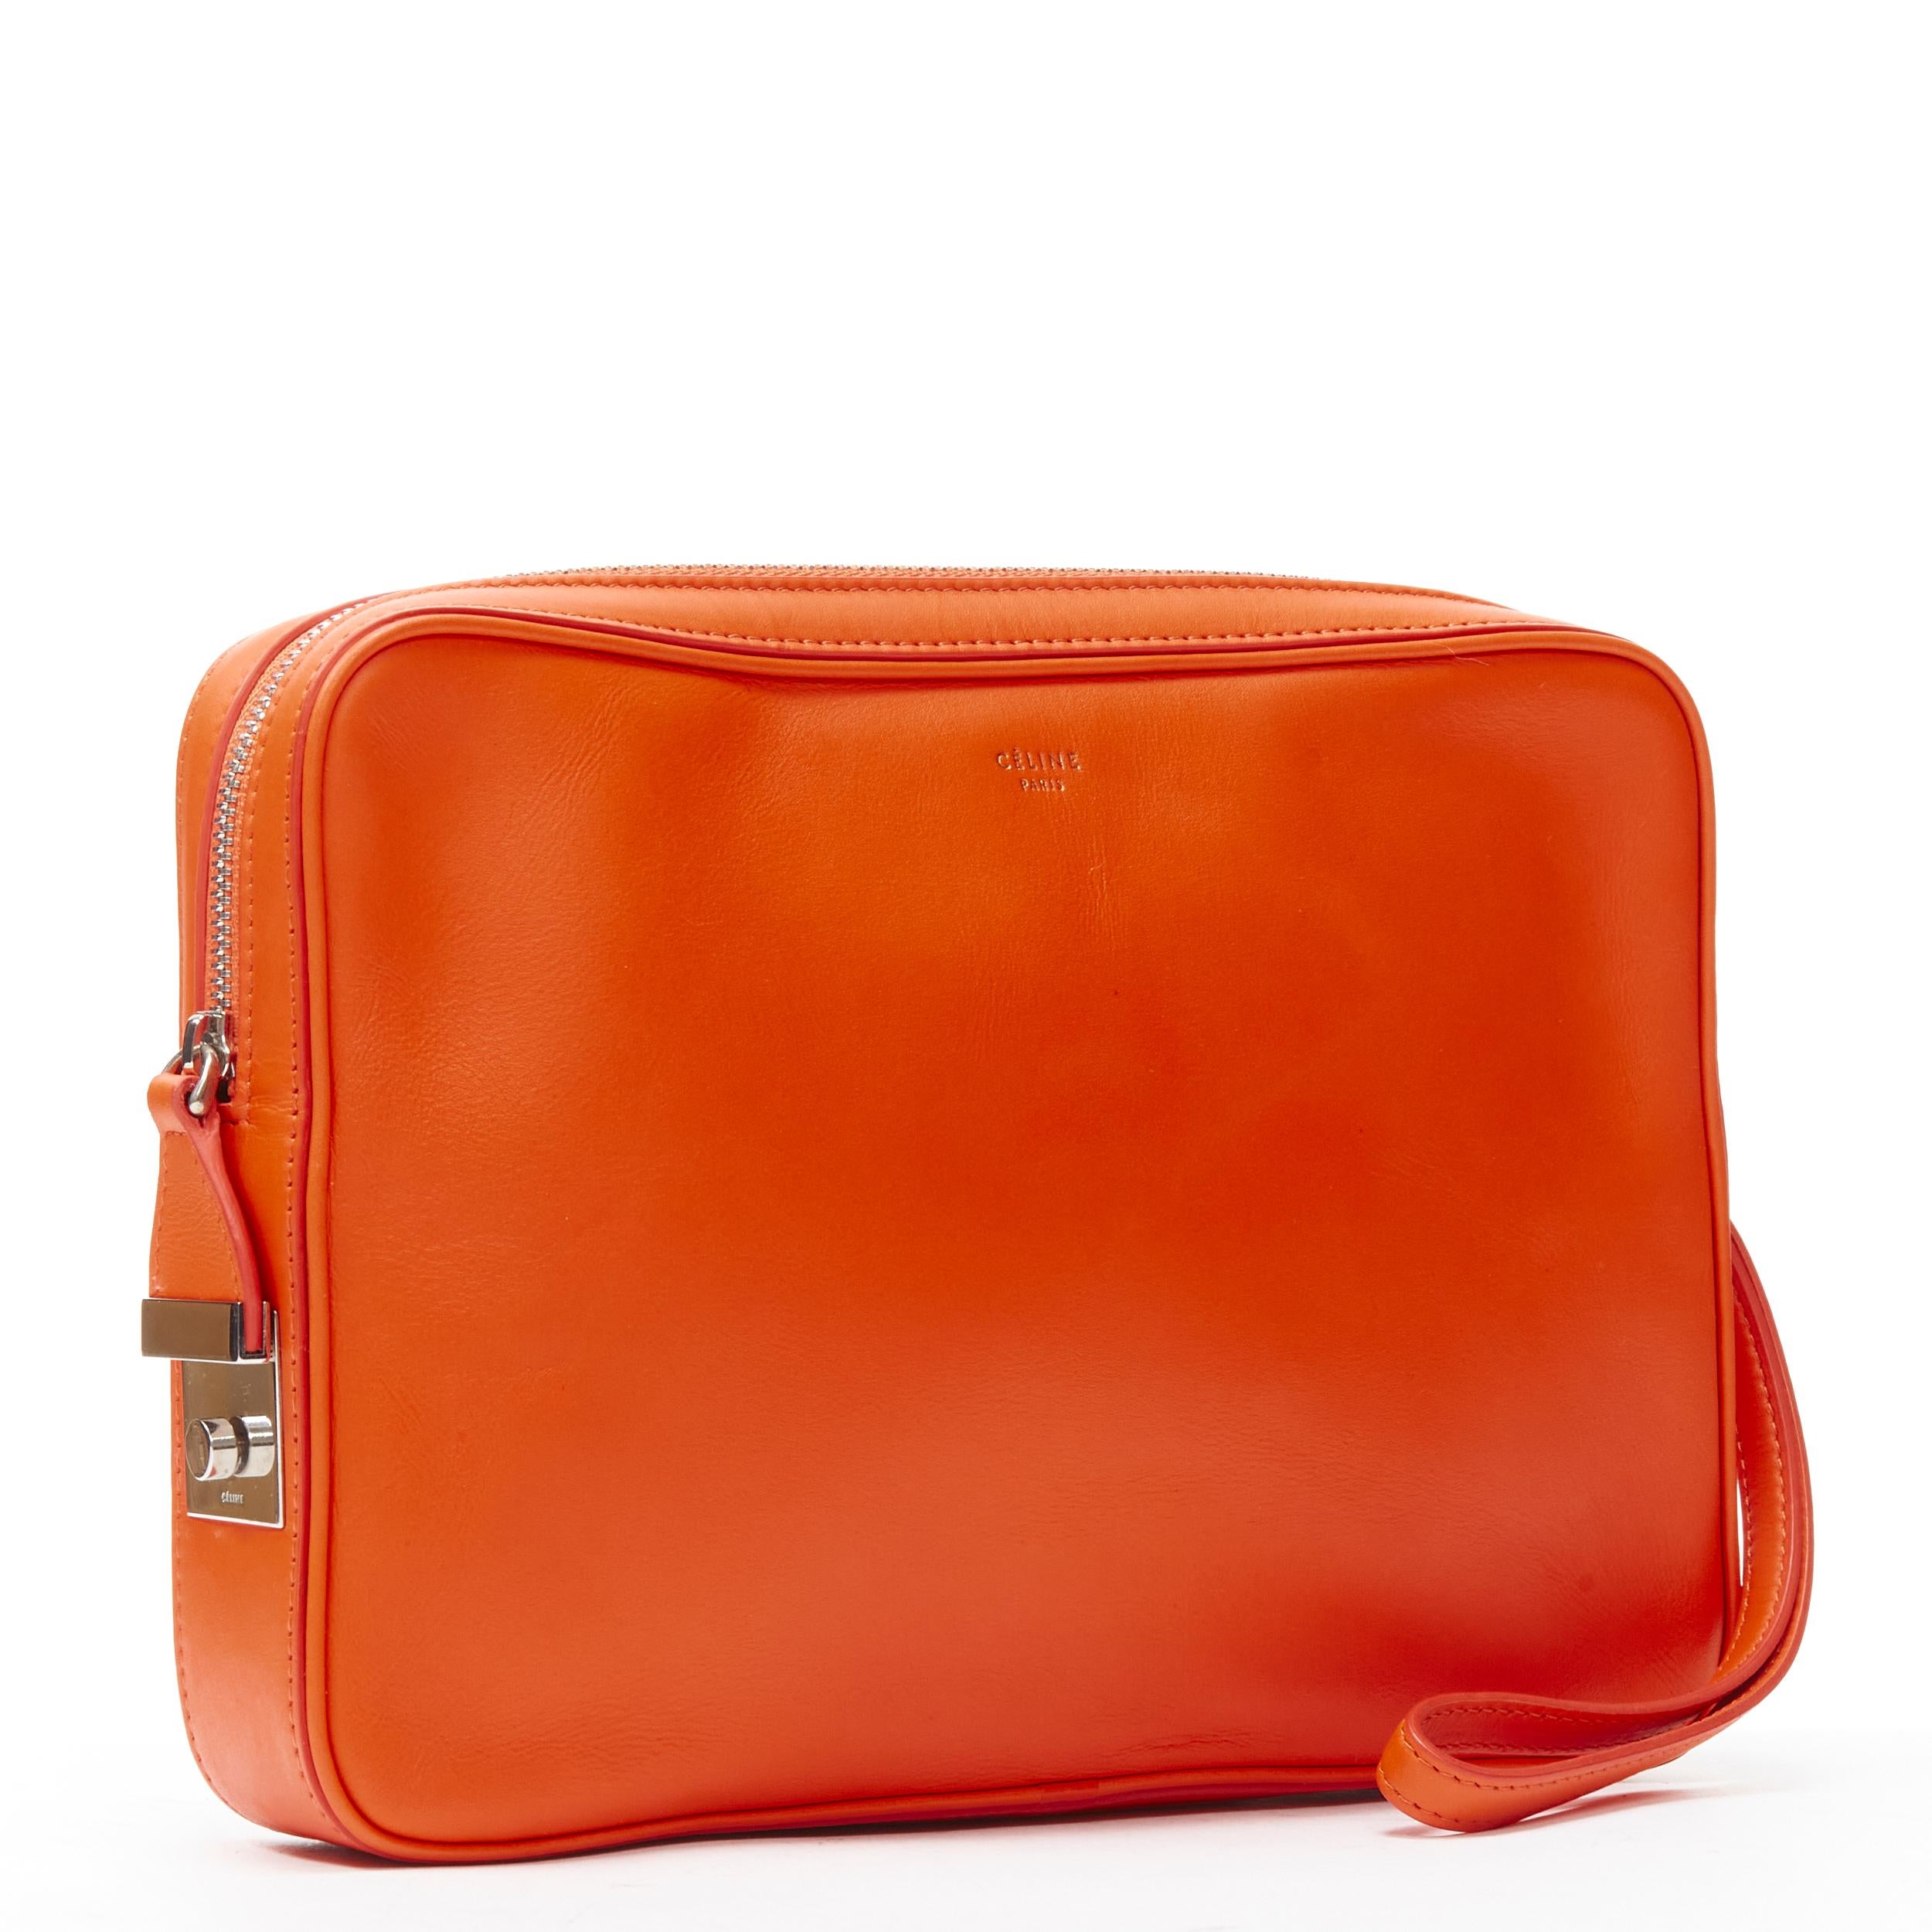 Orange OLD CELINE Phoebe Philo orange leather silver lock Dragonne leather pouch clutch